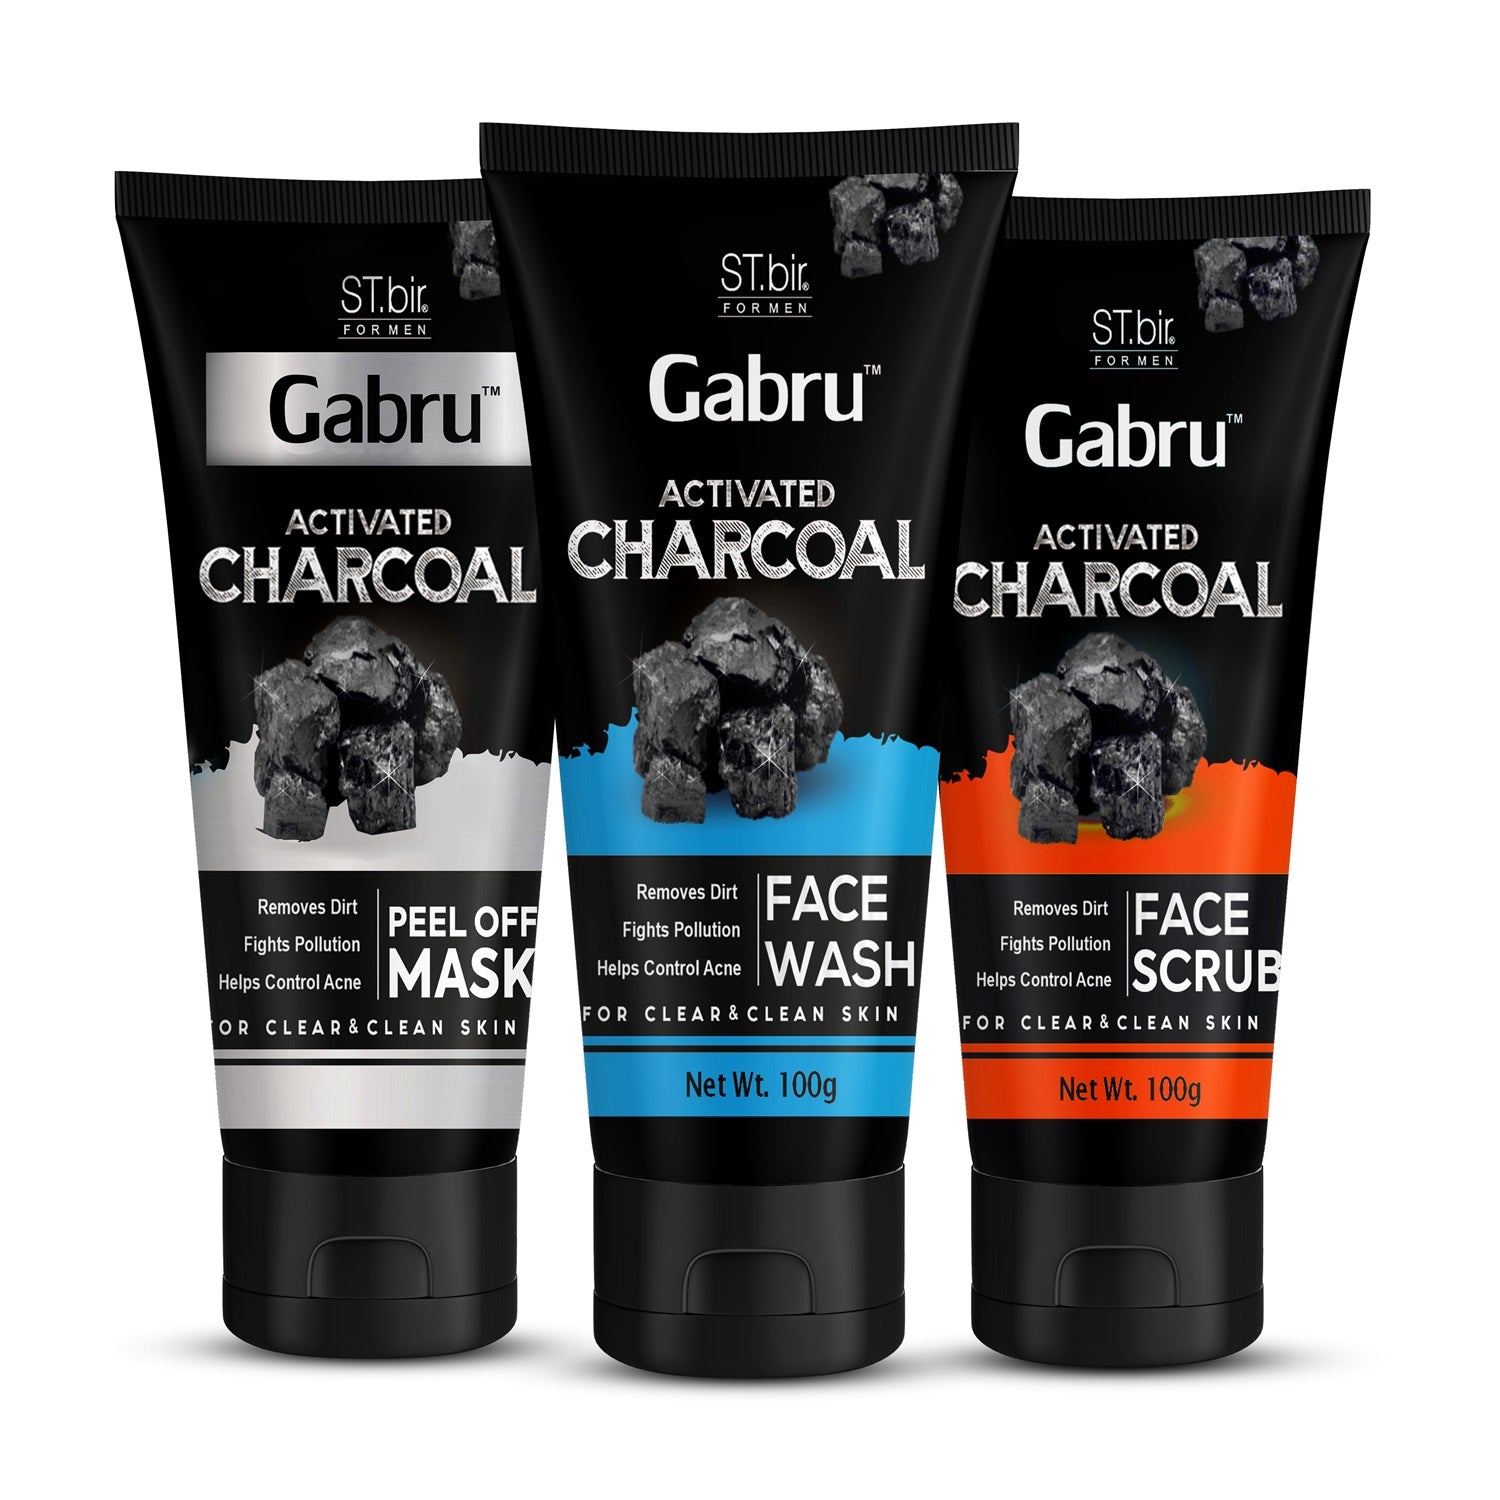 St bir Gabru Charcoal Face Wash + Charcoal Face Scrub + Charcoal Peel Off Mask Combo 300gm